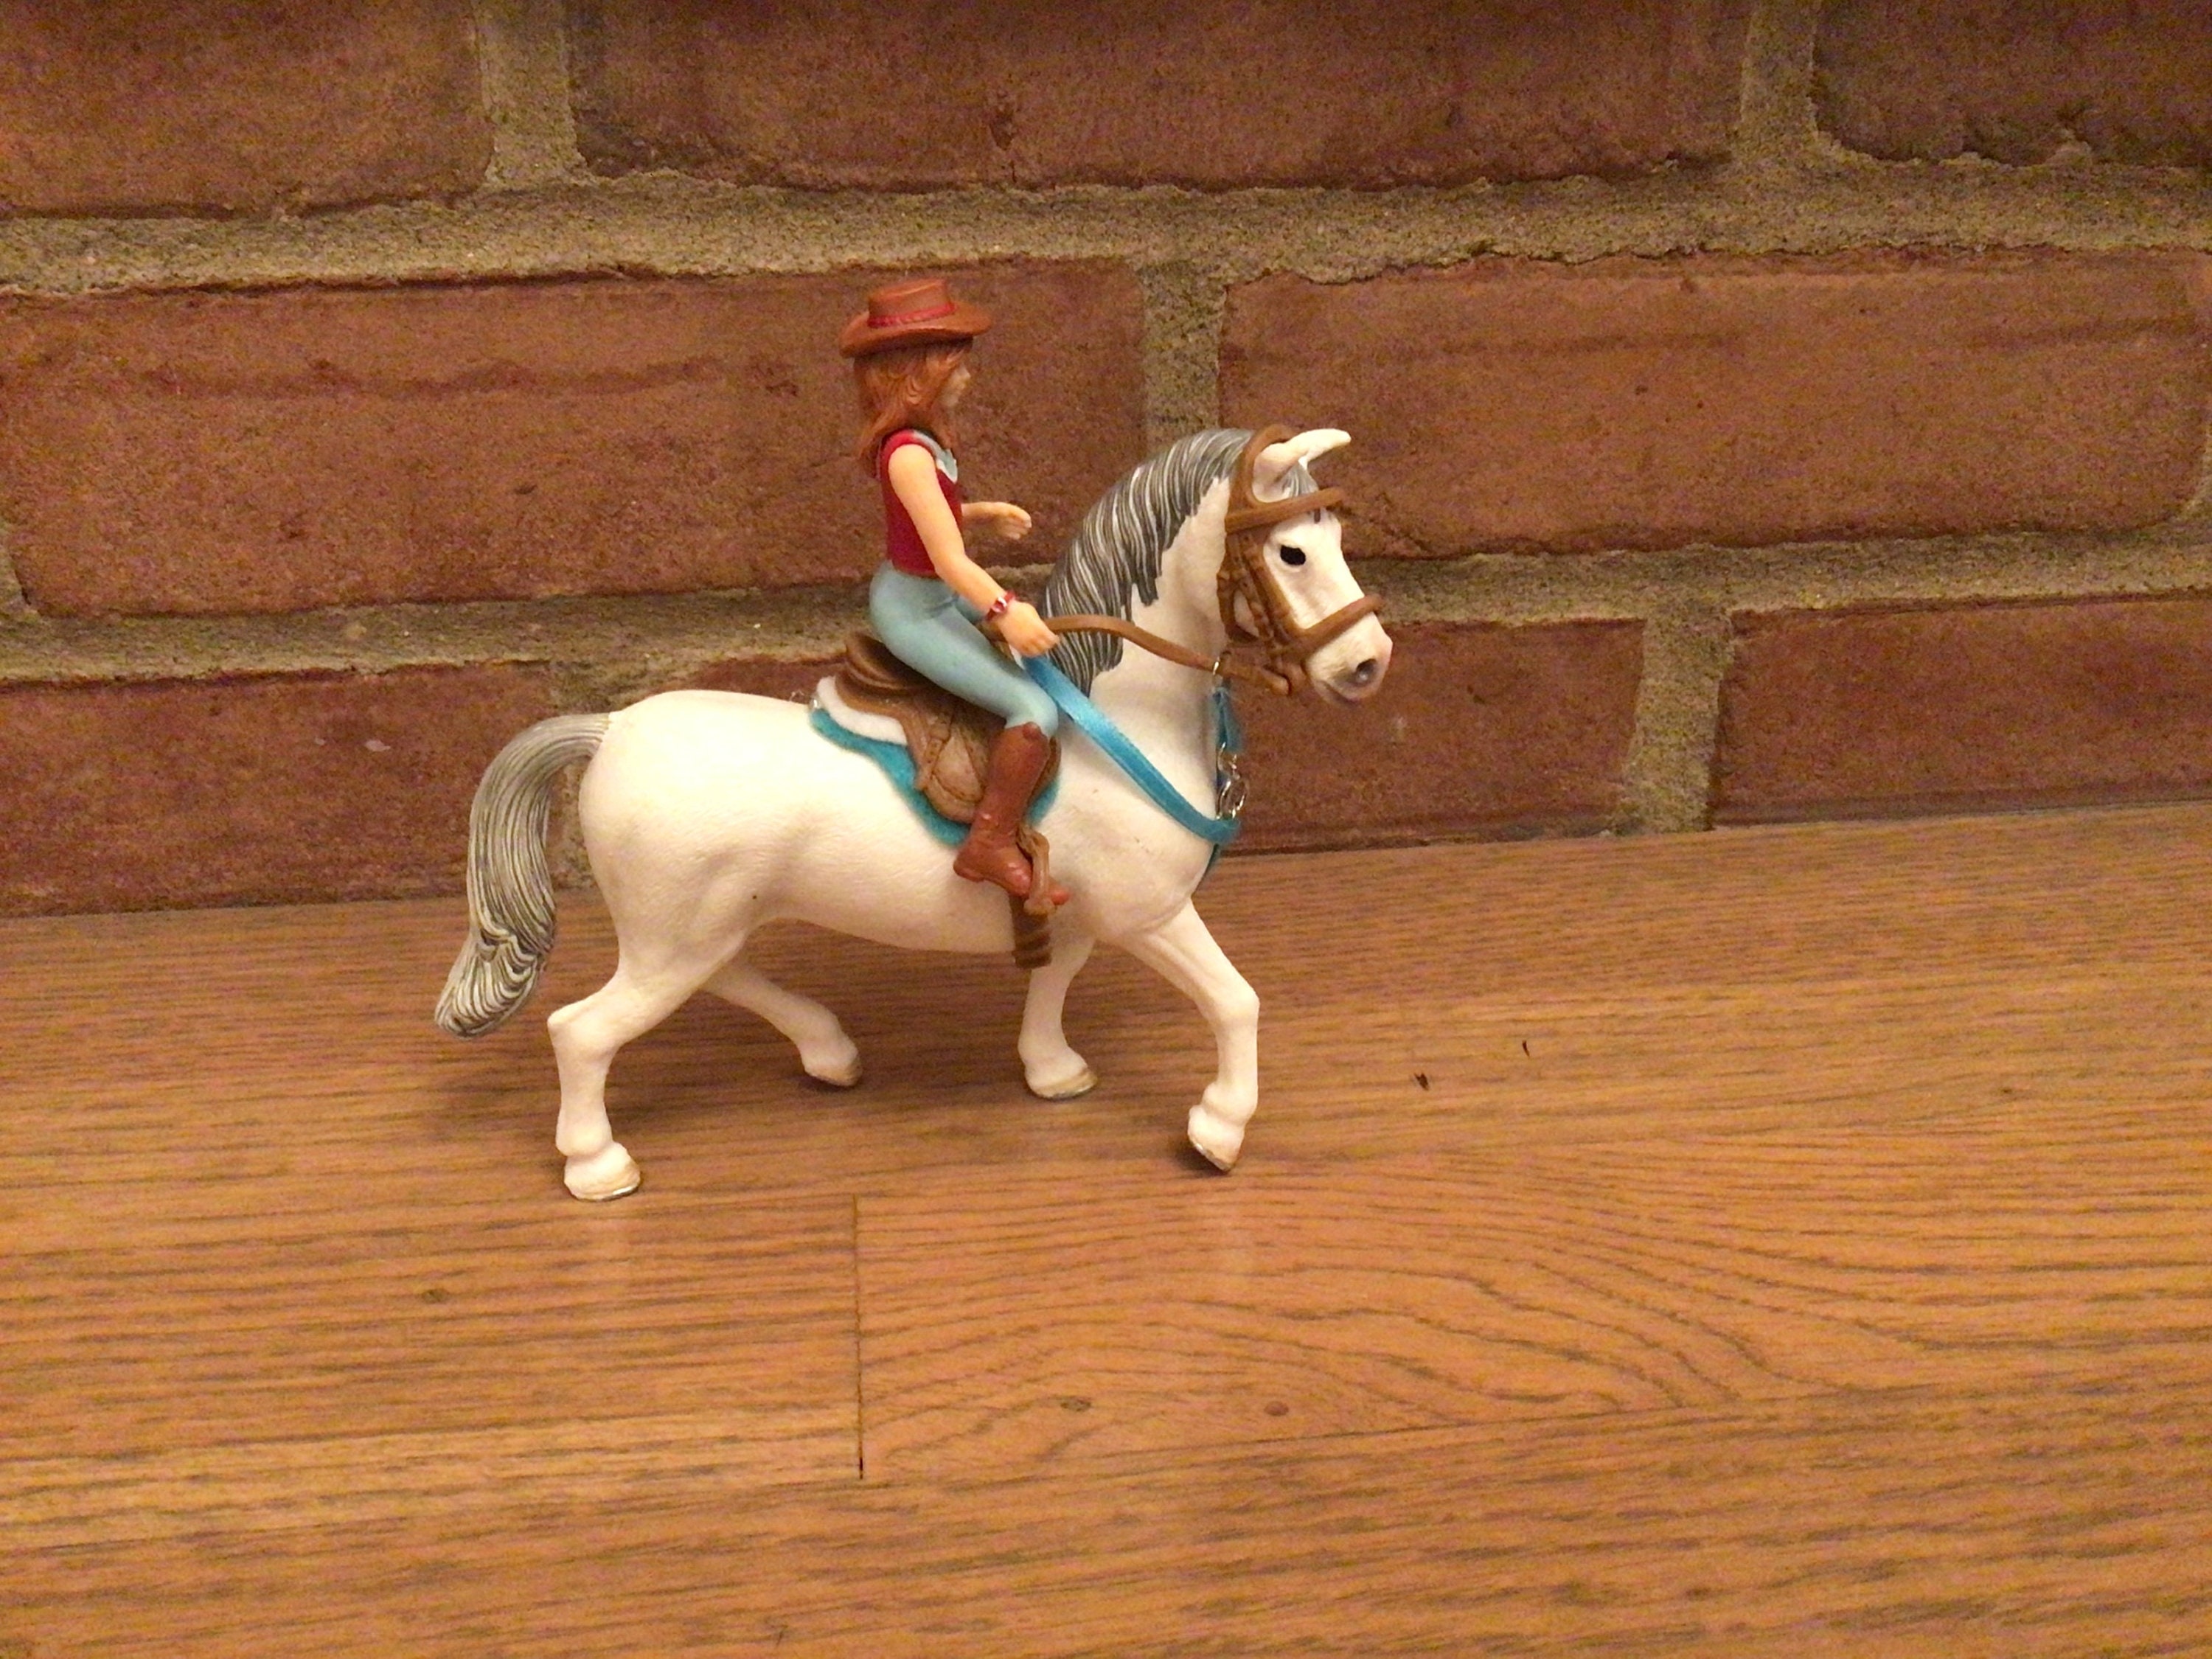 Handmade toy Schleich horse Tack, kids gift toys accessories - Inspire  Uplift